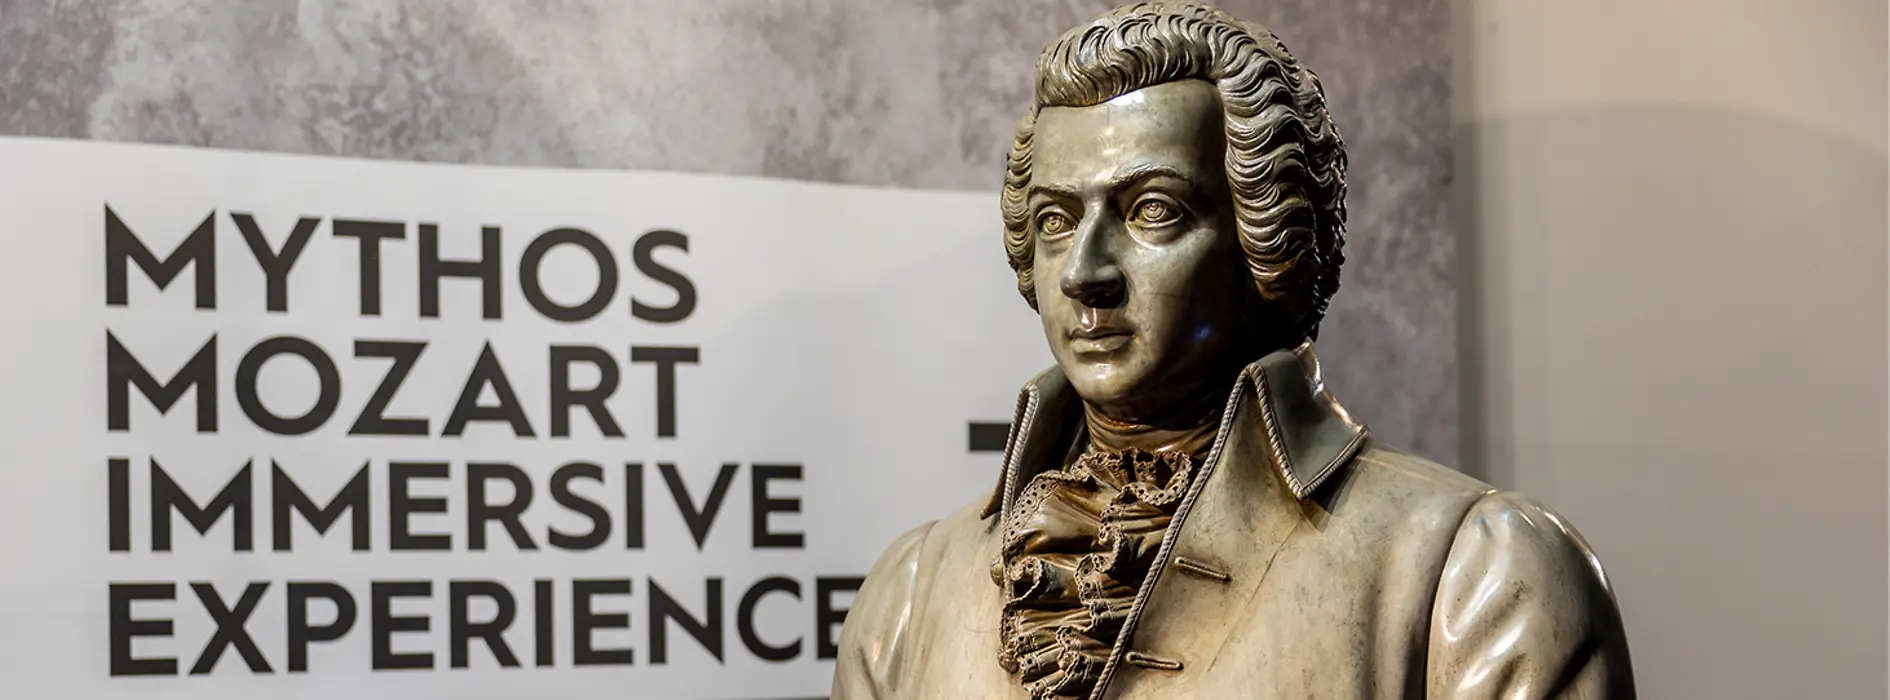 Mythos Mozart - Büste